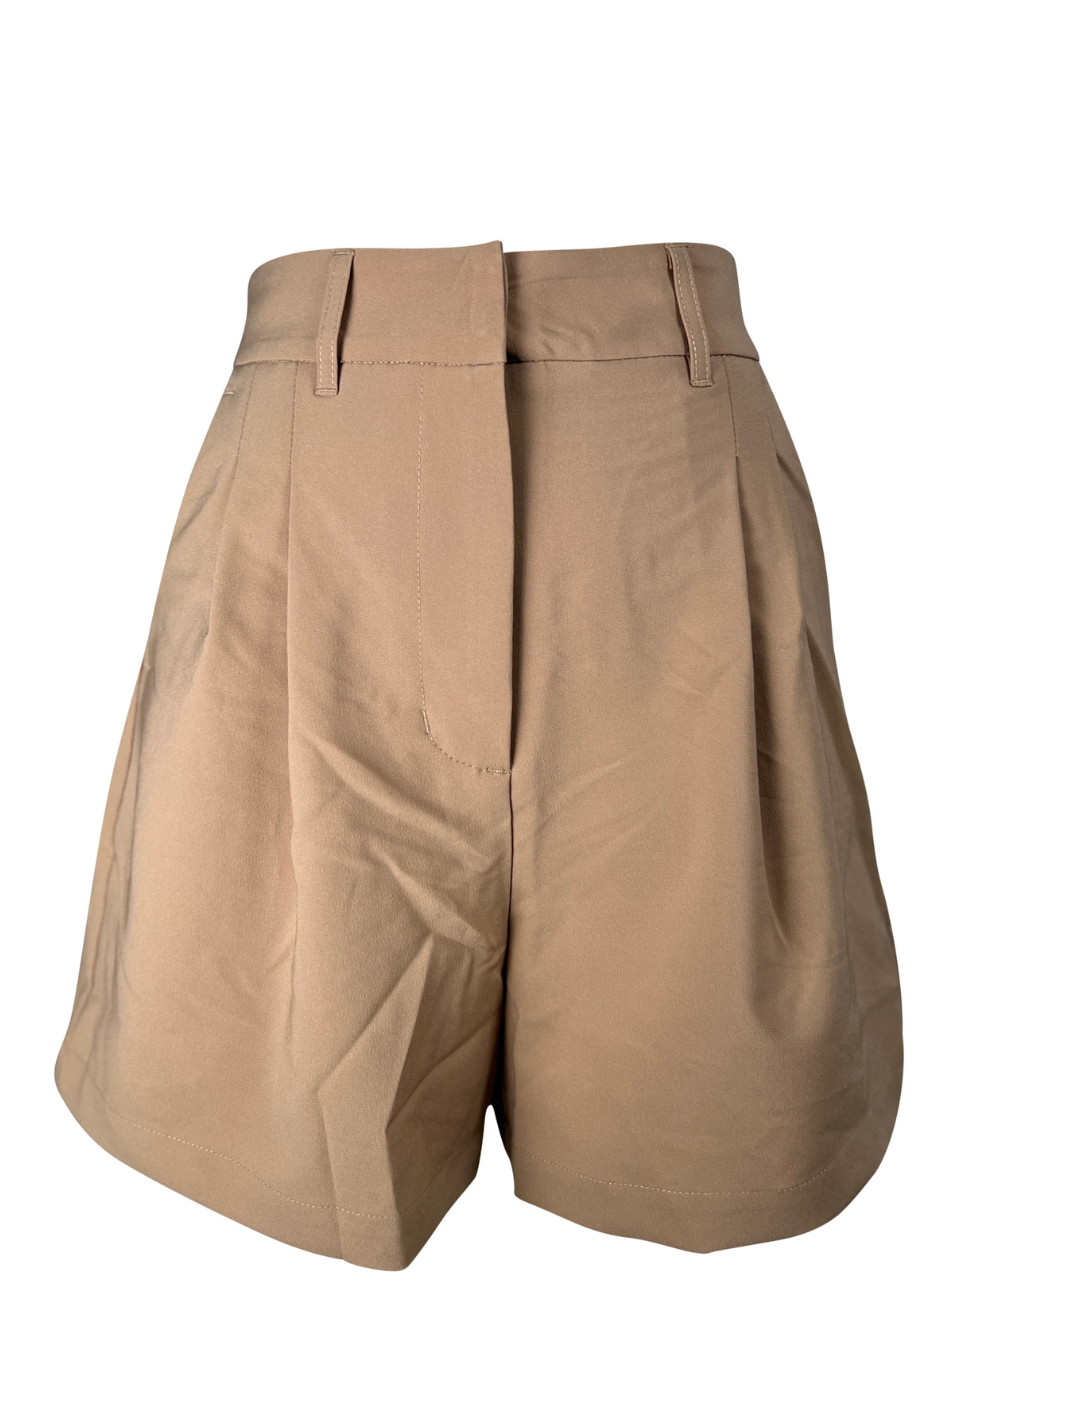 Beige Classy Shorts